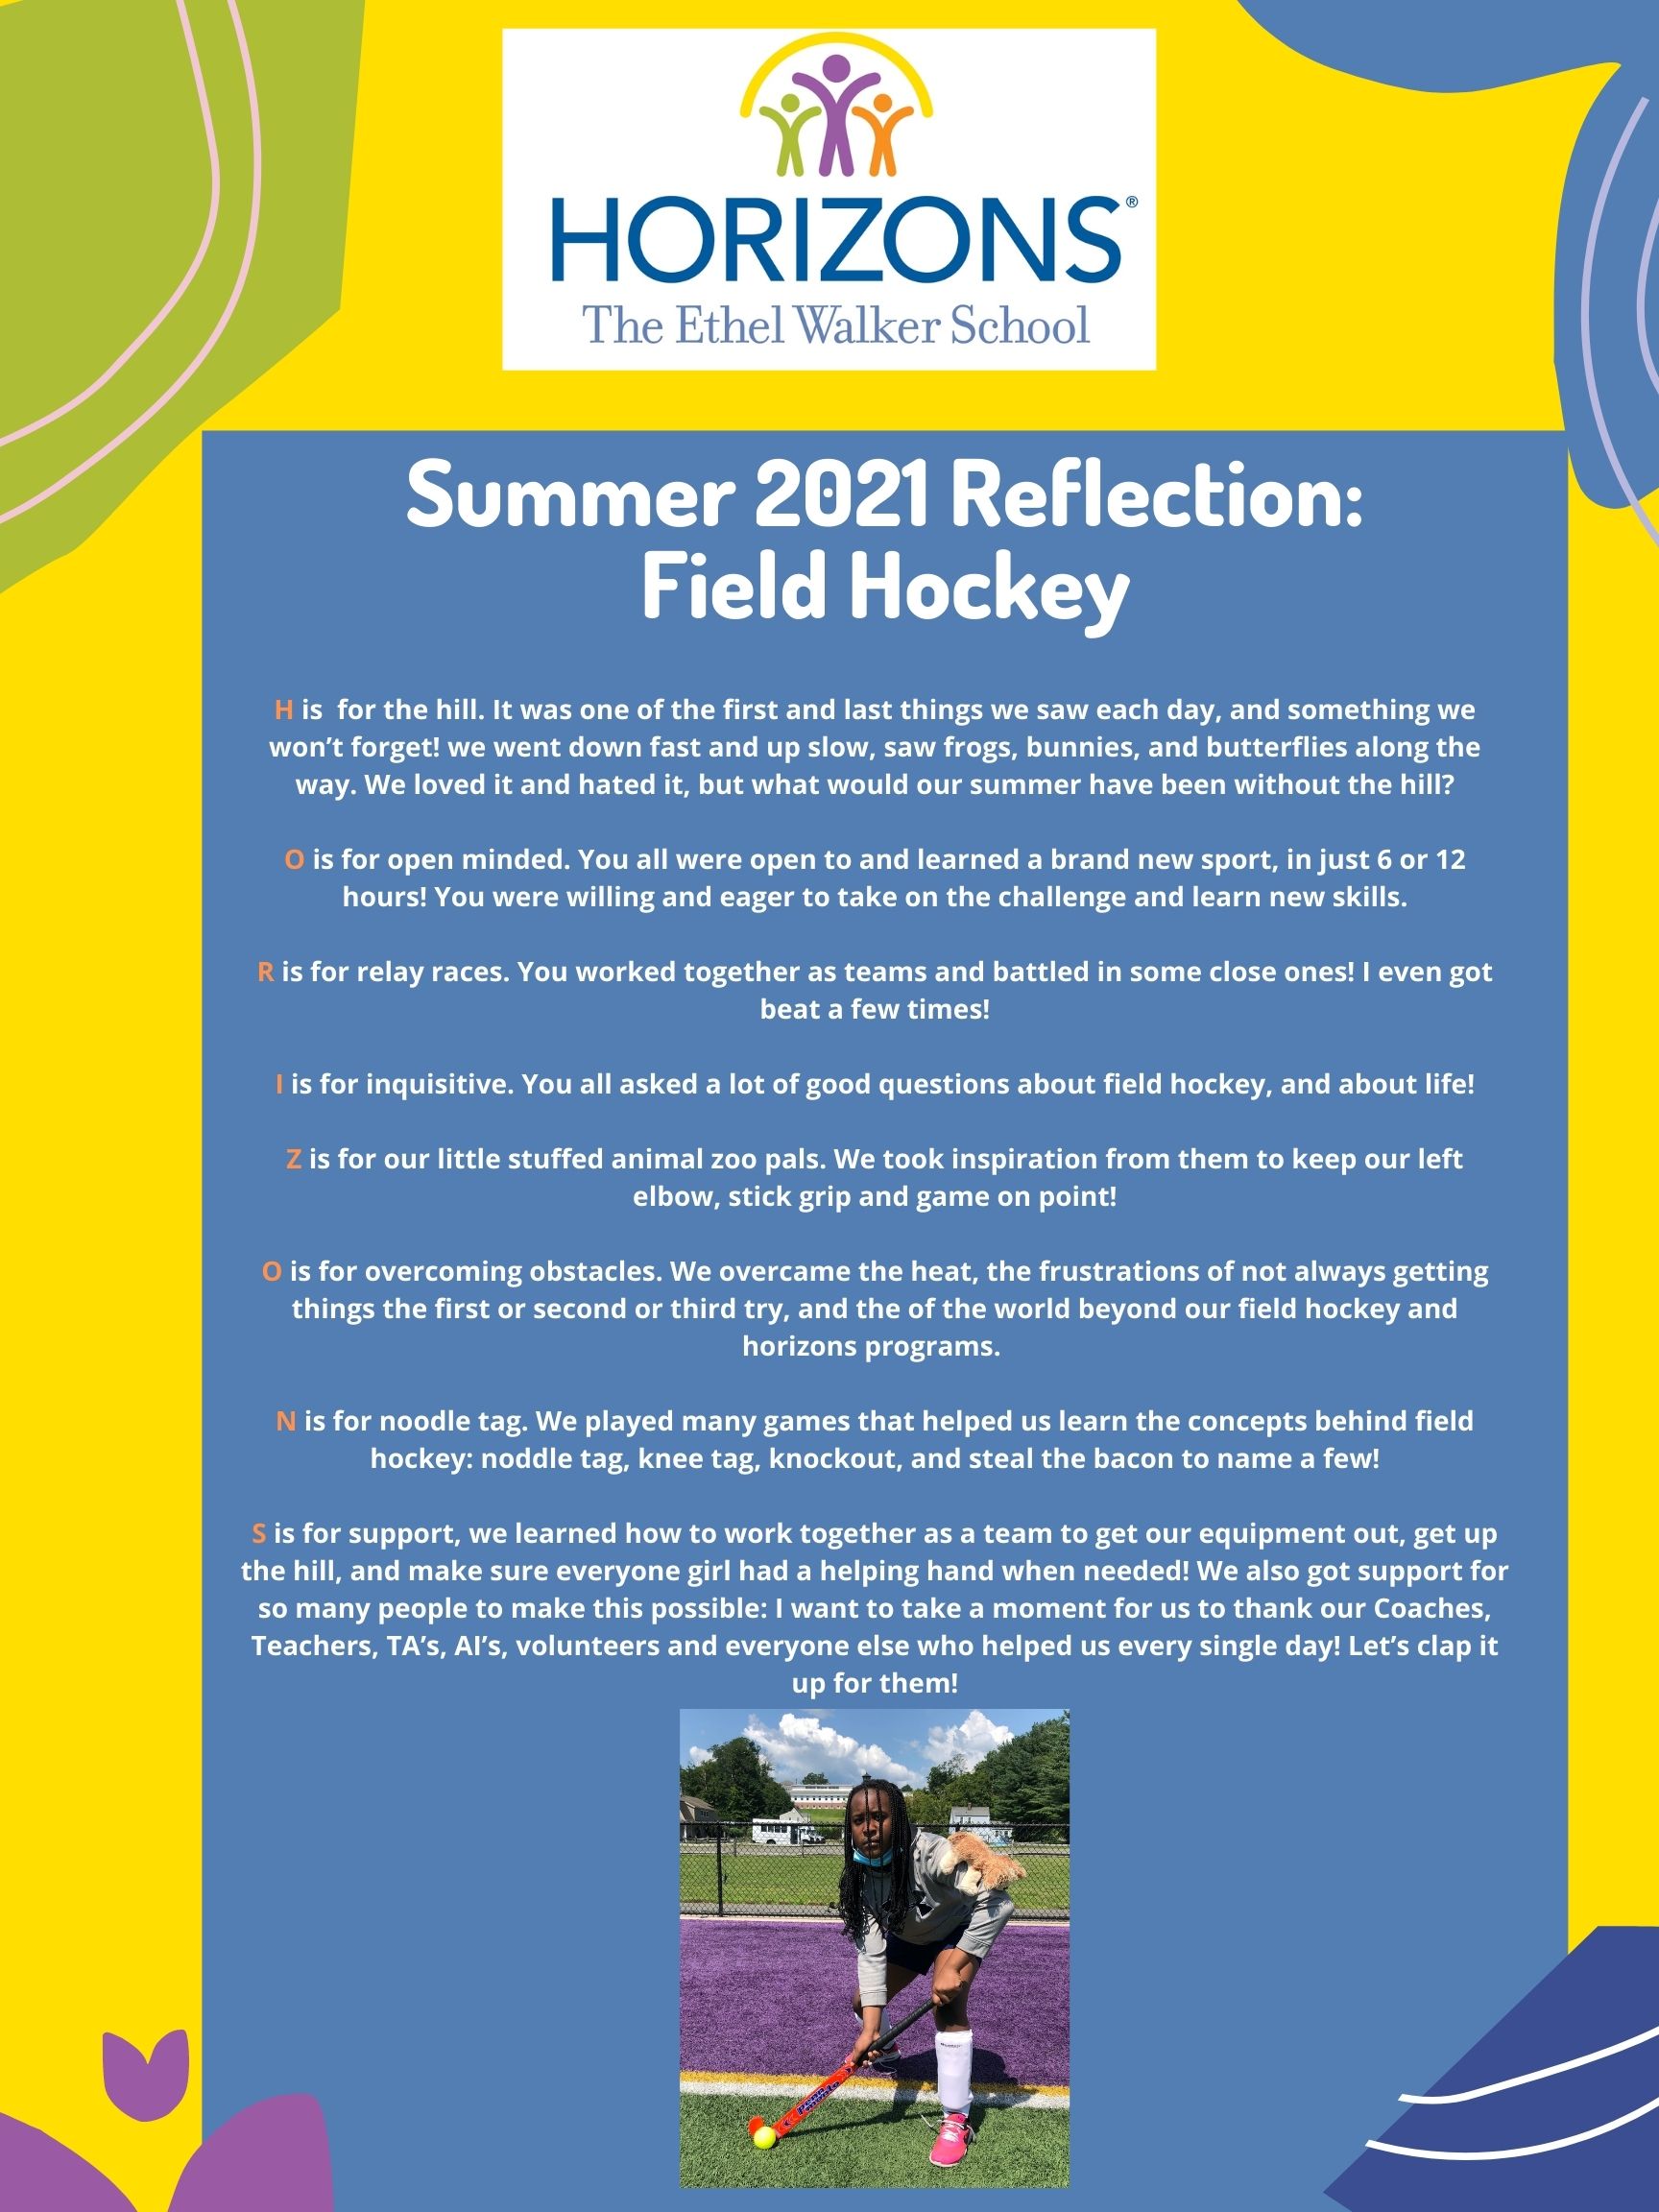 Field Hockey: Growing Greatest | Horizons at The Ethel Walker School